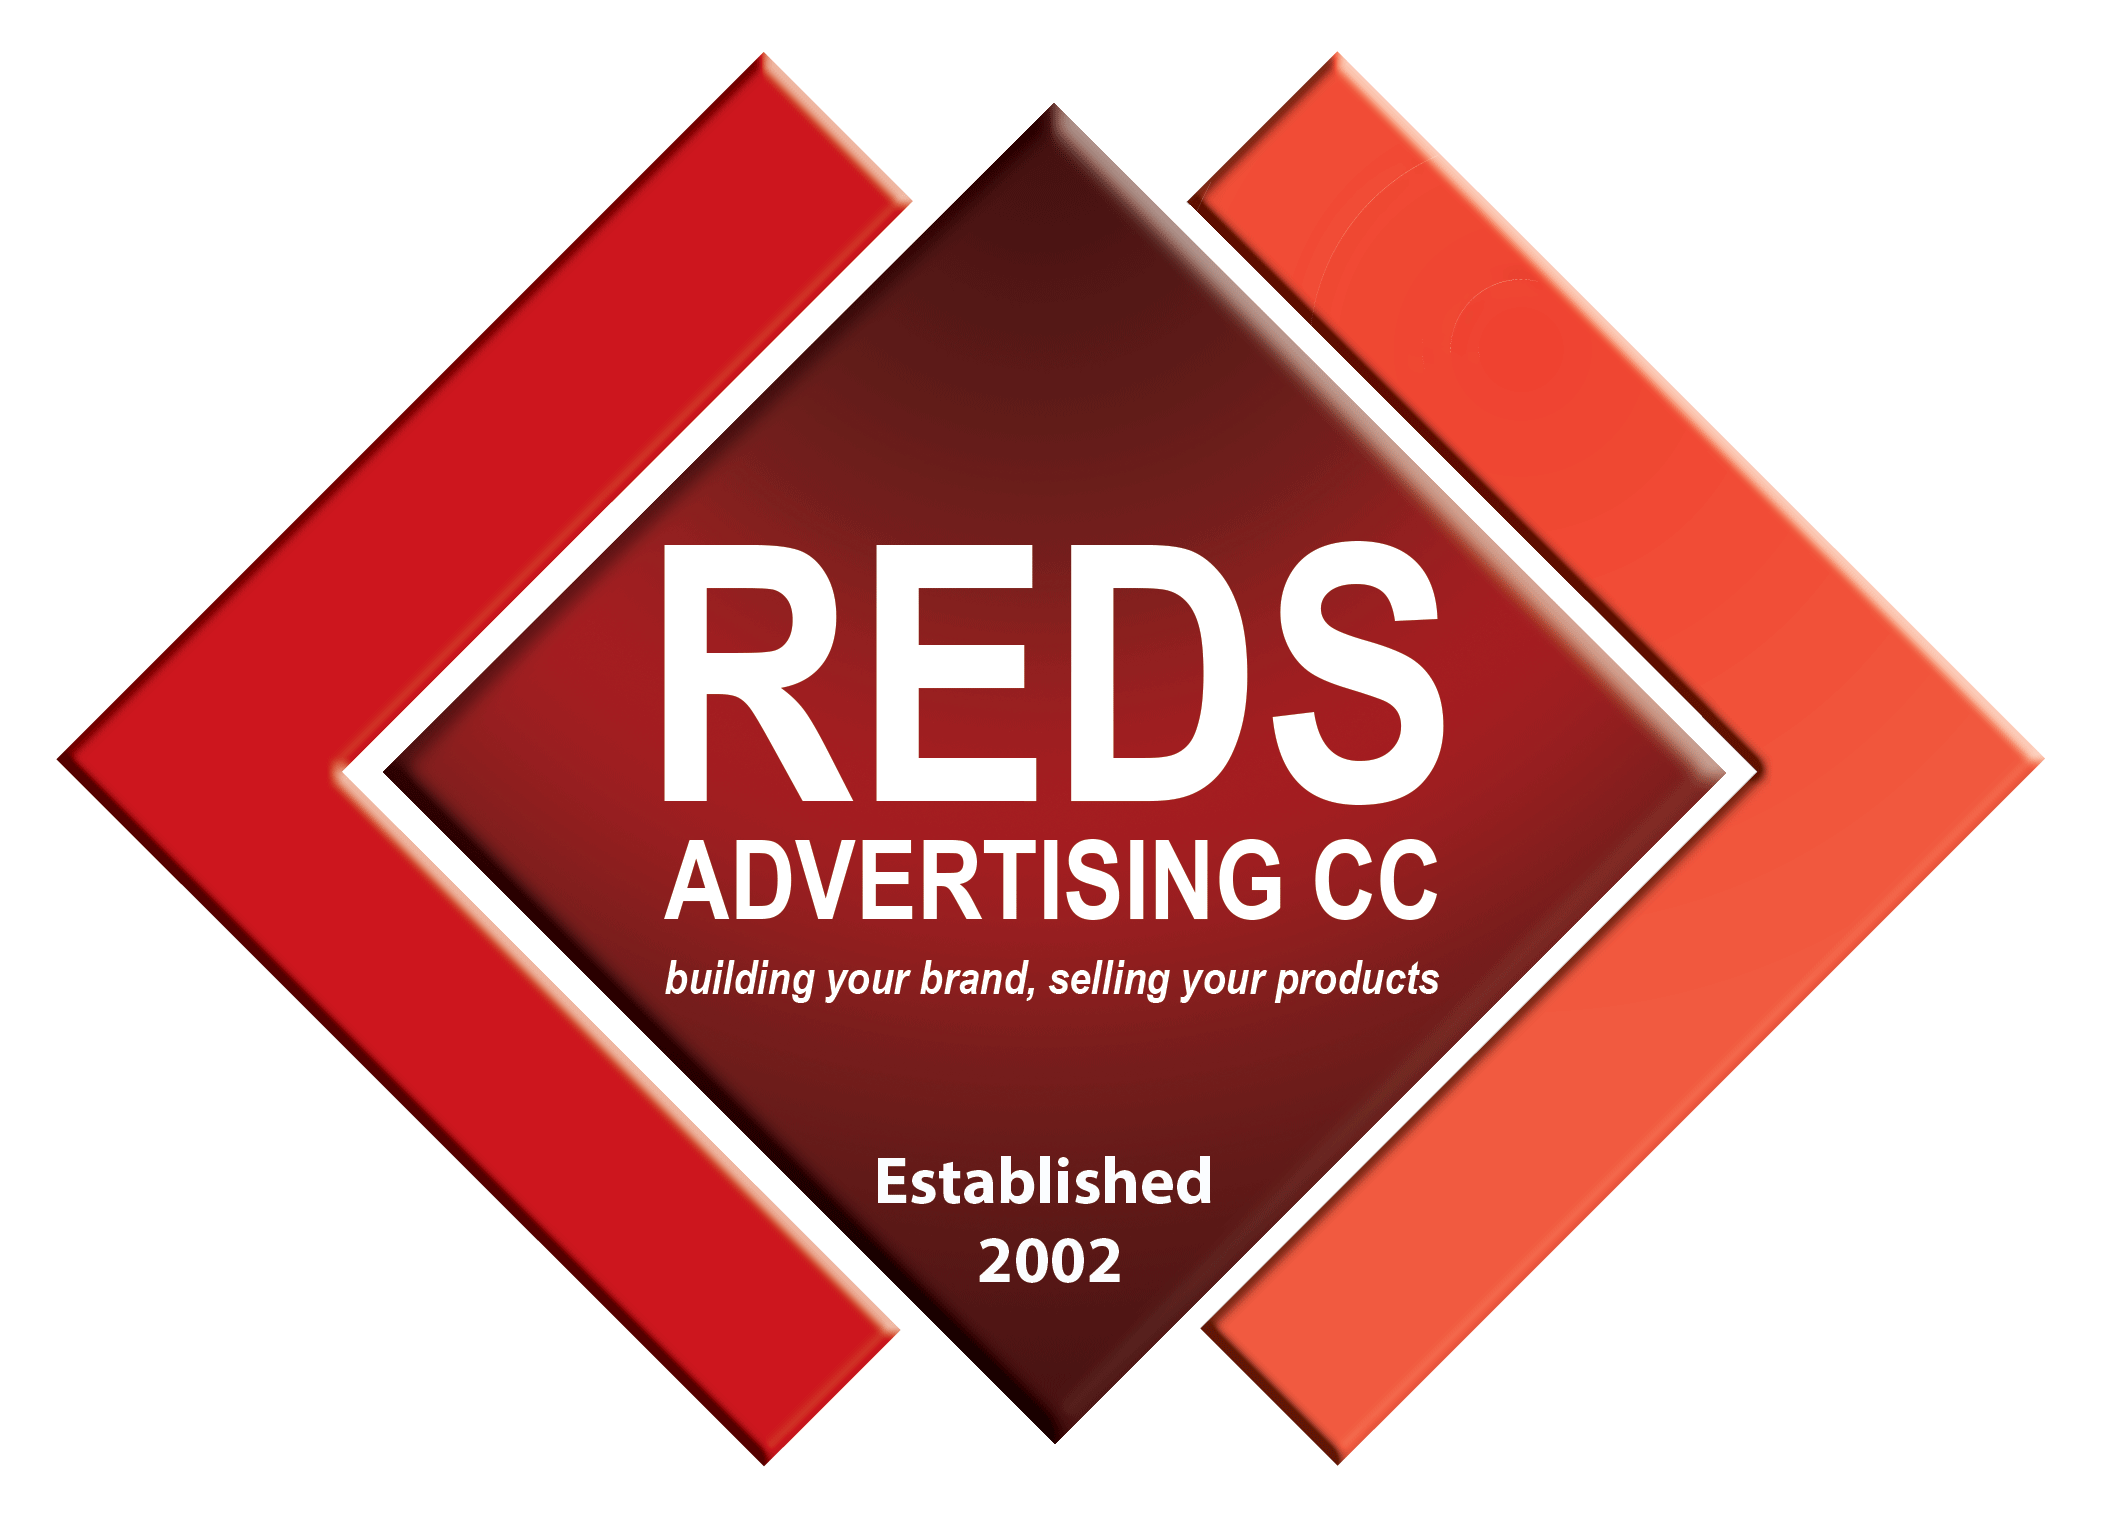 Reds advertising - Marketing Company